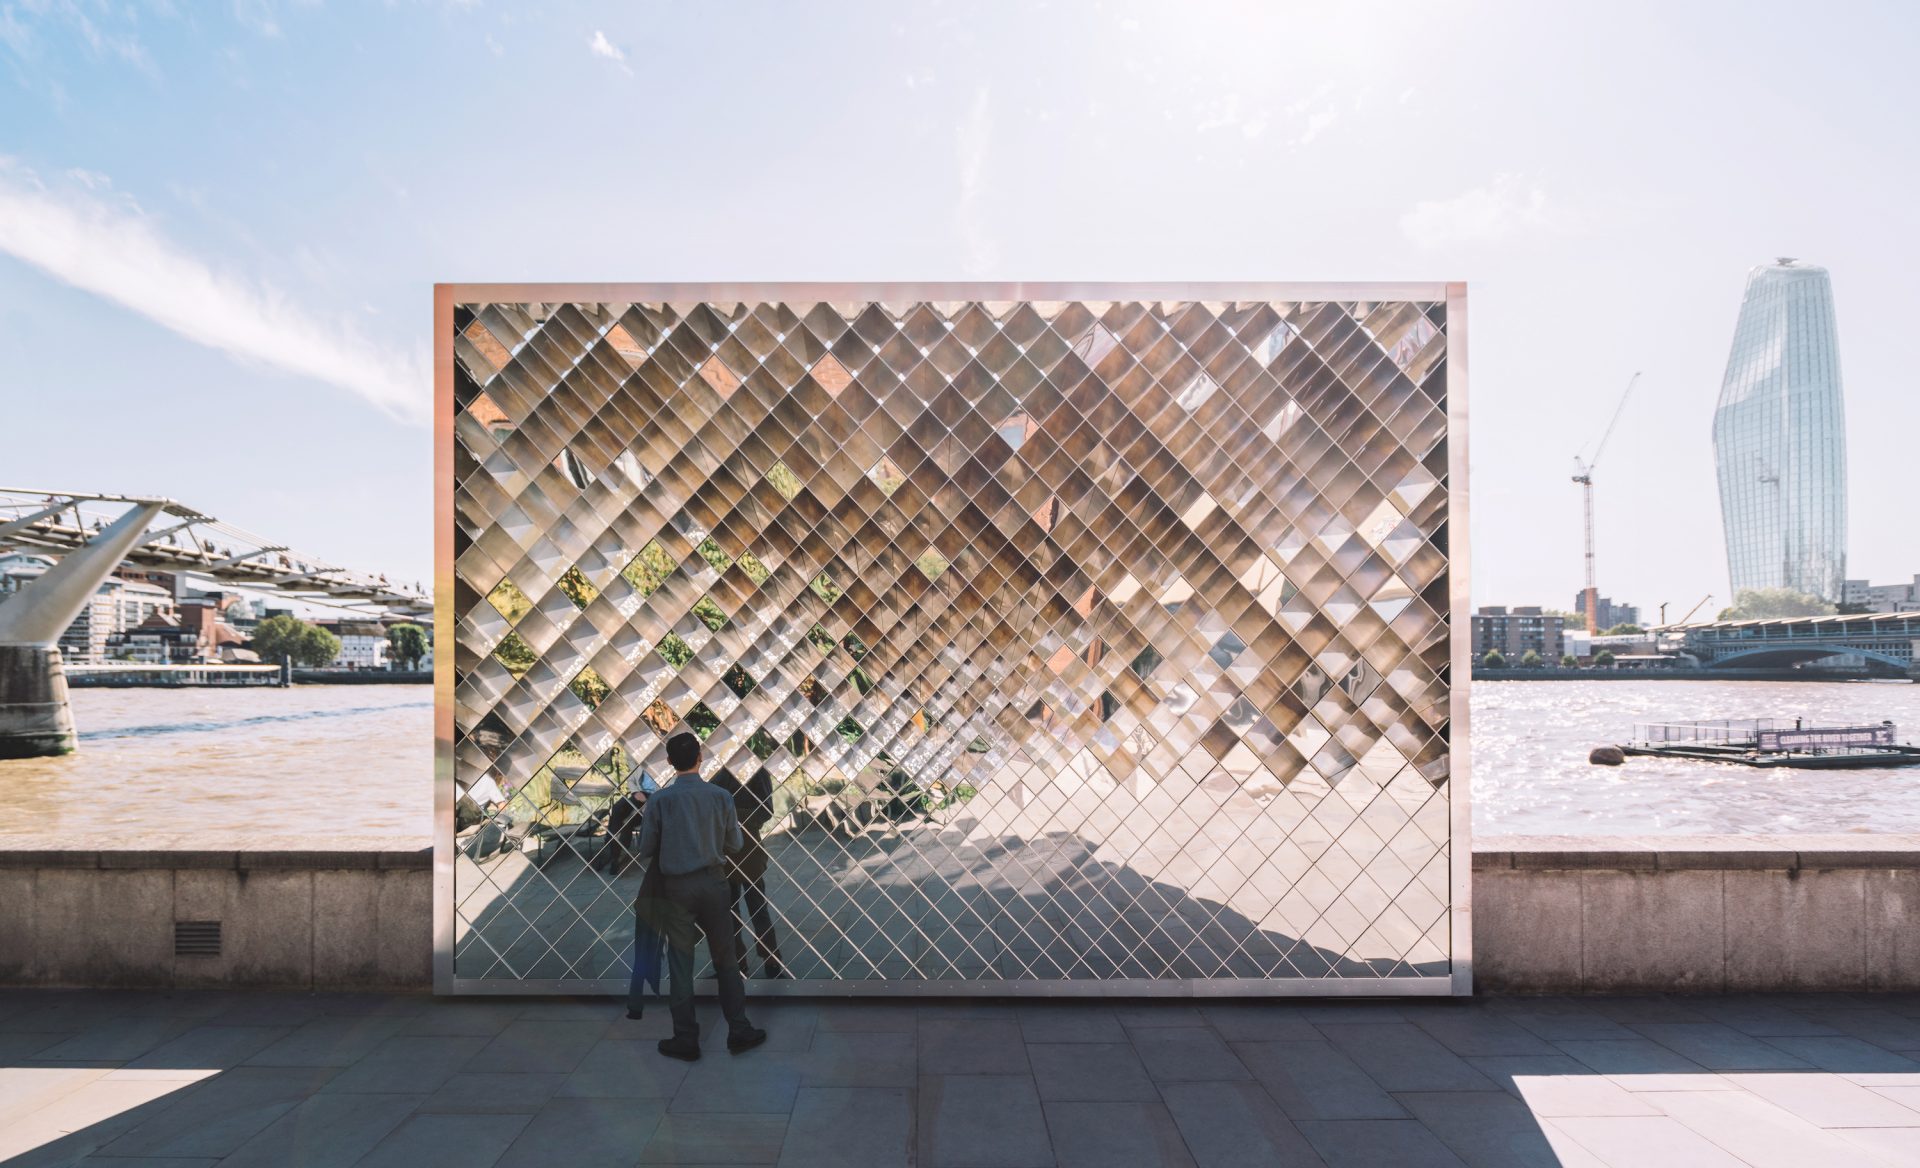 LFA and City of London Corporation reveal Wolfgang Buttress’ winning ‘Liminal’ installation